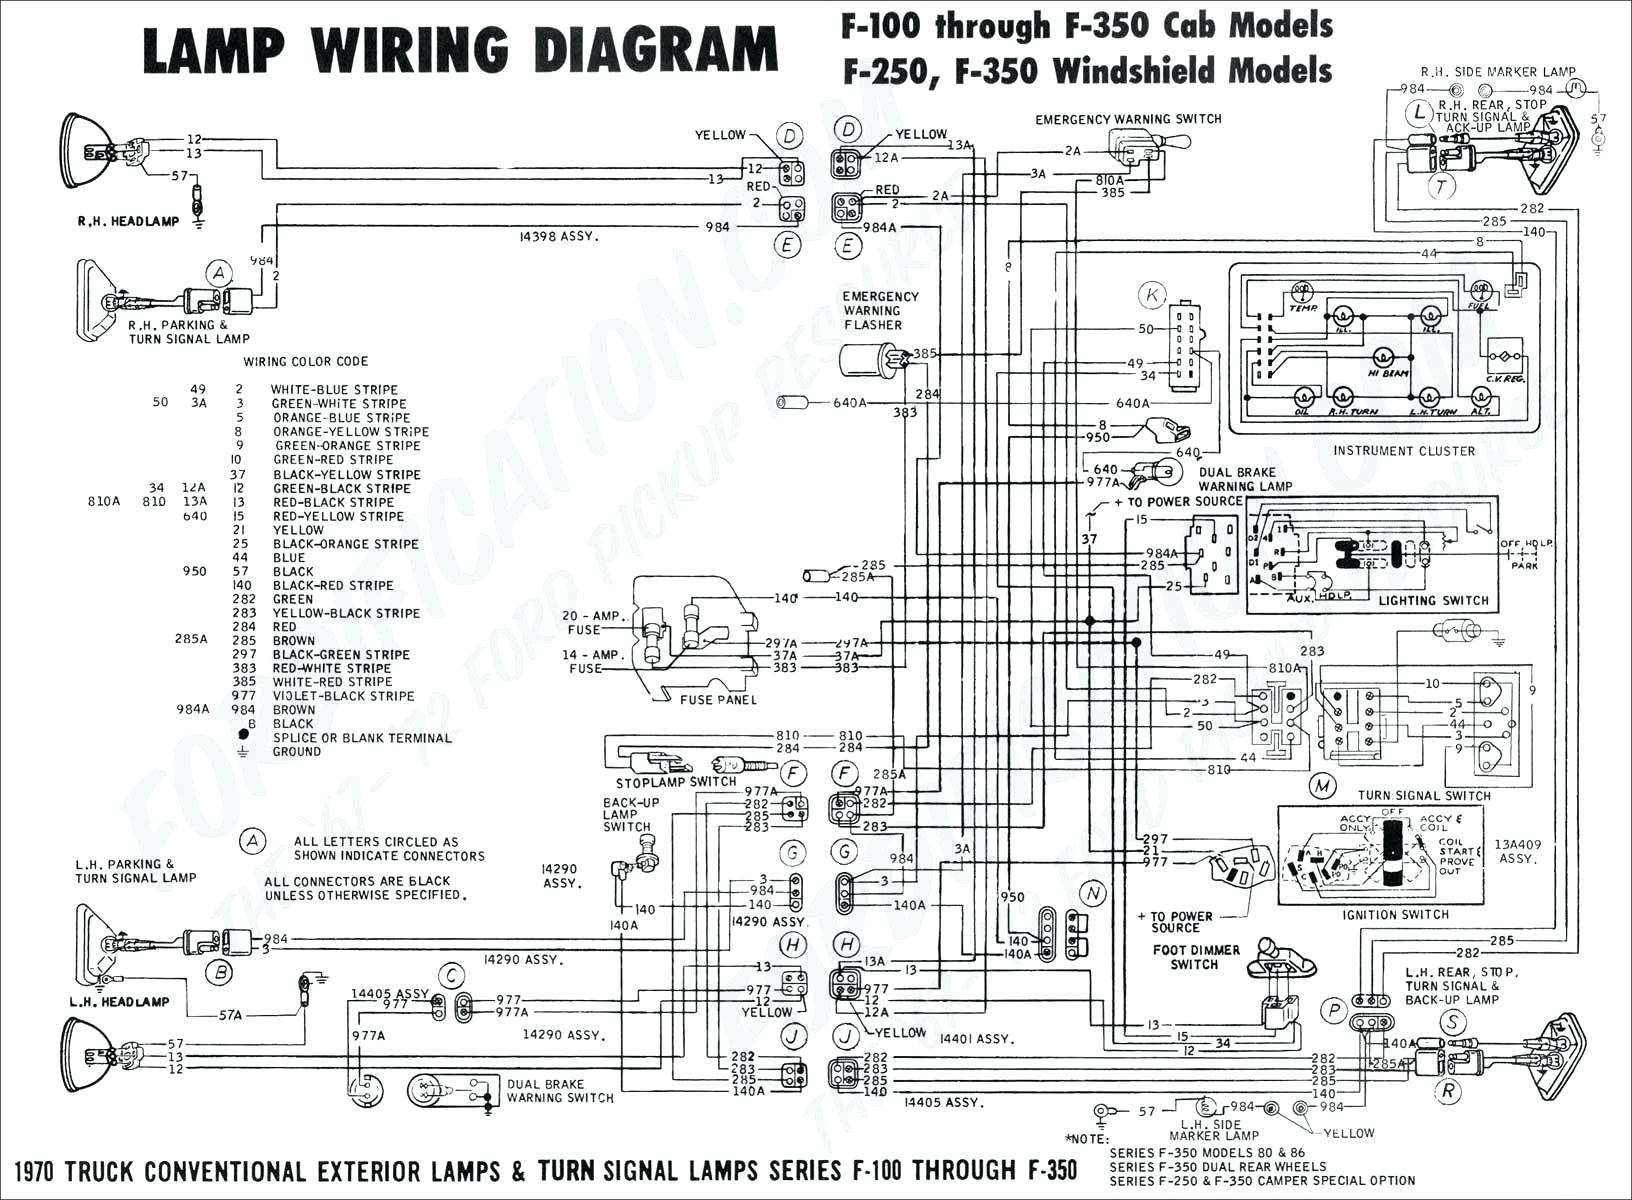 Chevy 7 Pin Trailer Wiring Diagram Inspirational 2005 Chevy Silverado Trailer Wiring Diagram ford Resize Gmc